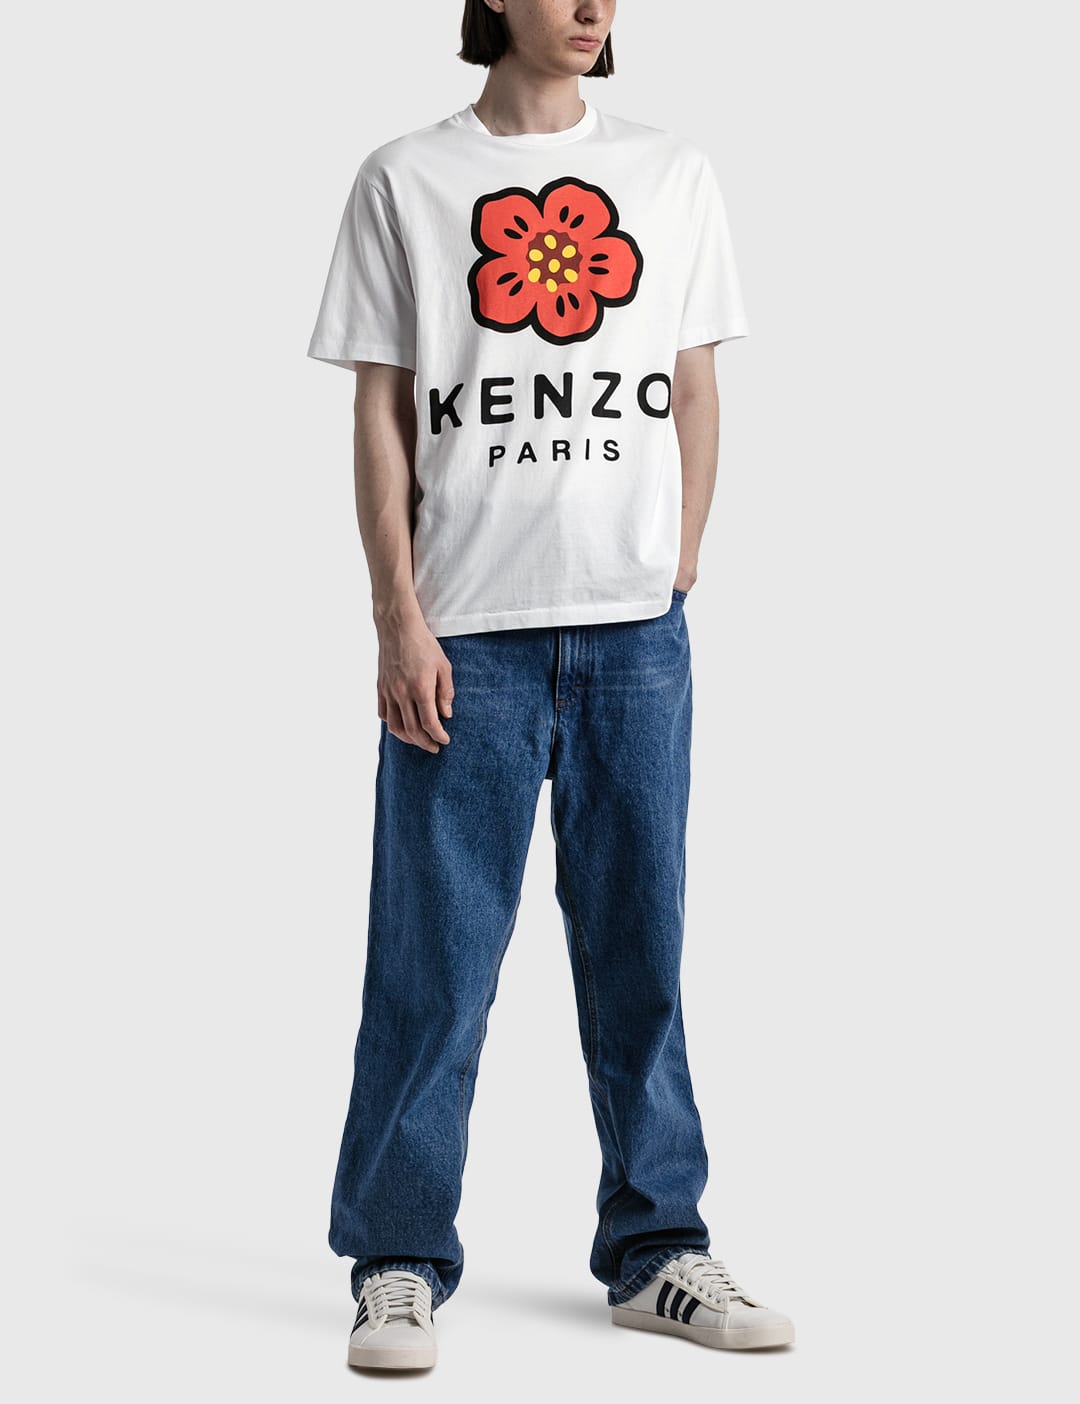 Kenzo Paris - BOKE FLOWER T-shirt | HBX - Globally Curated Fashion 